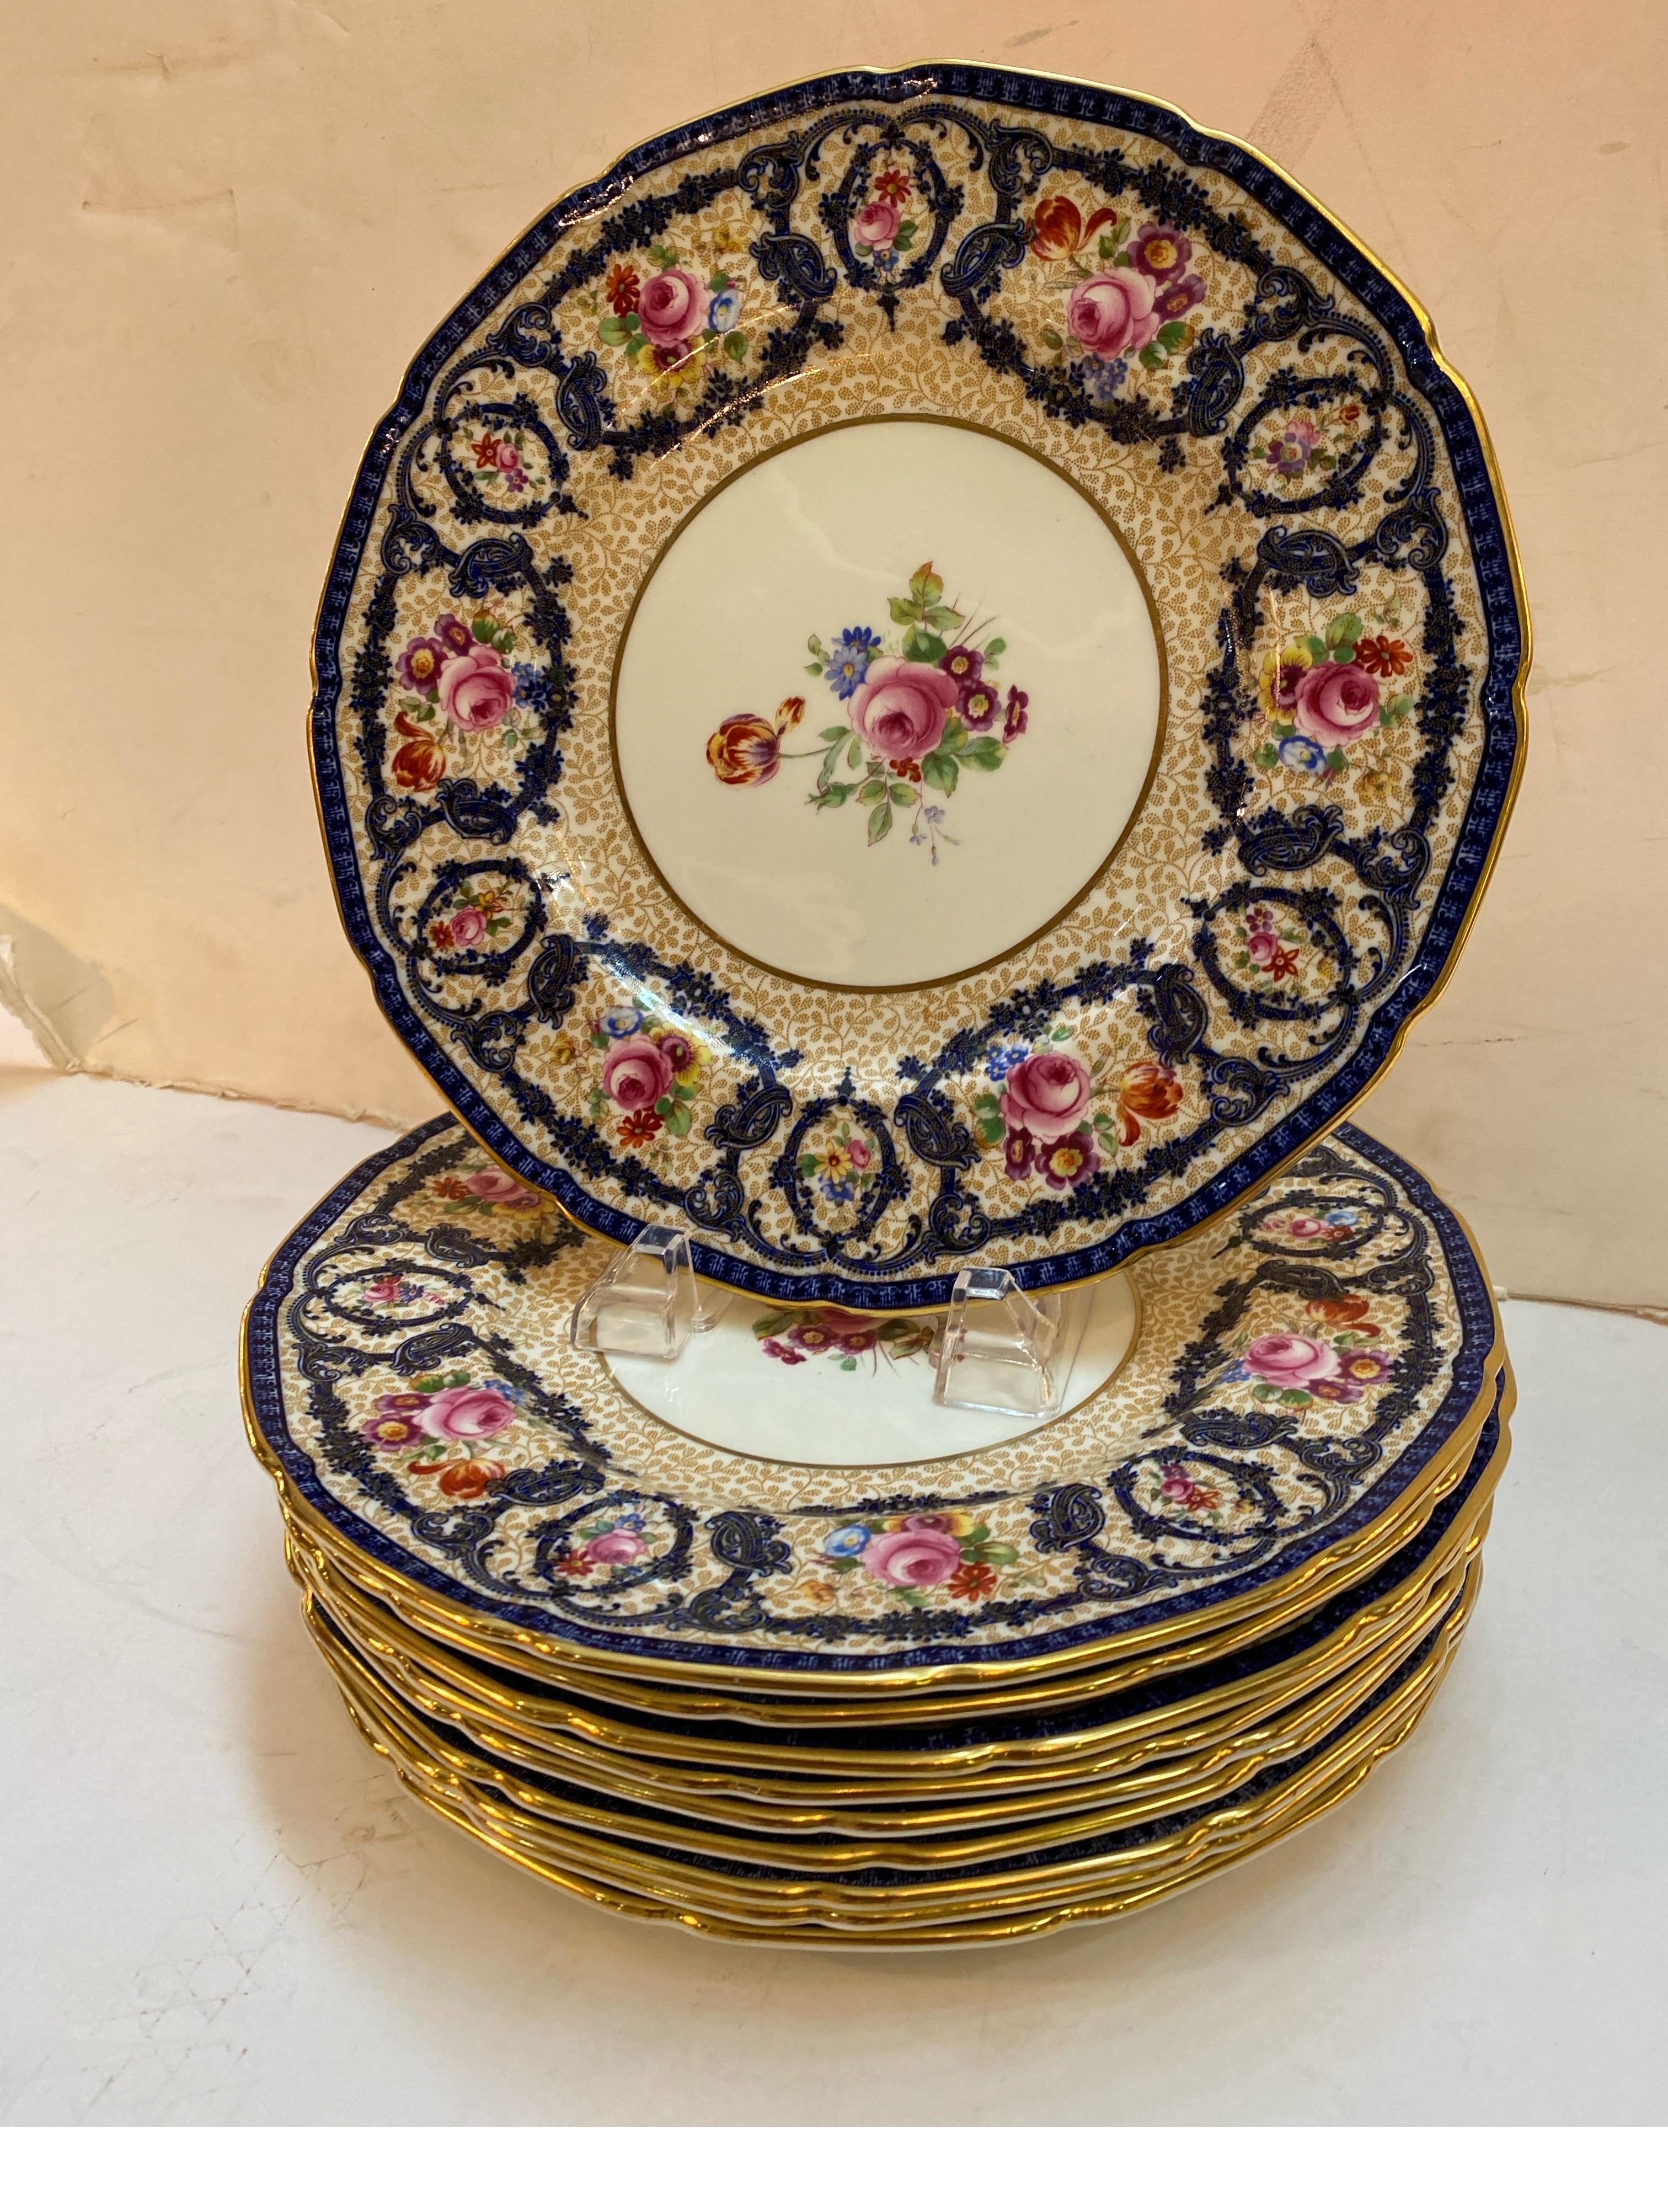 Porcelain A Set of 10 Hand Painted Antique Service Plates by Royal Doulton Circa 1915 For Sale